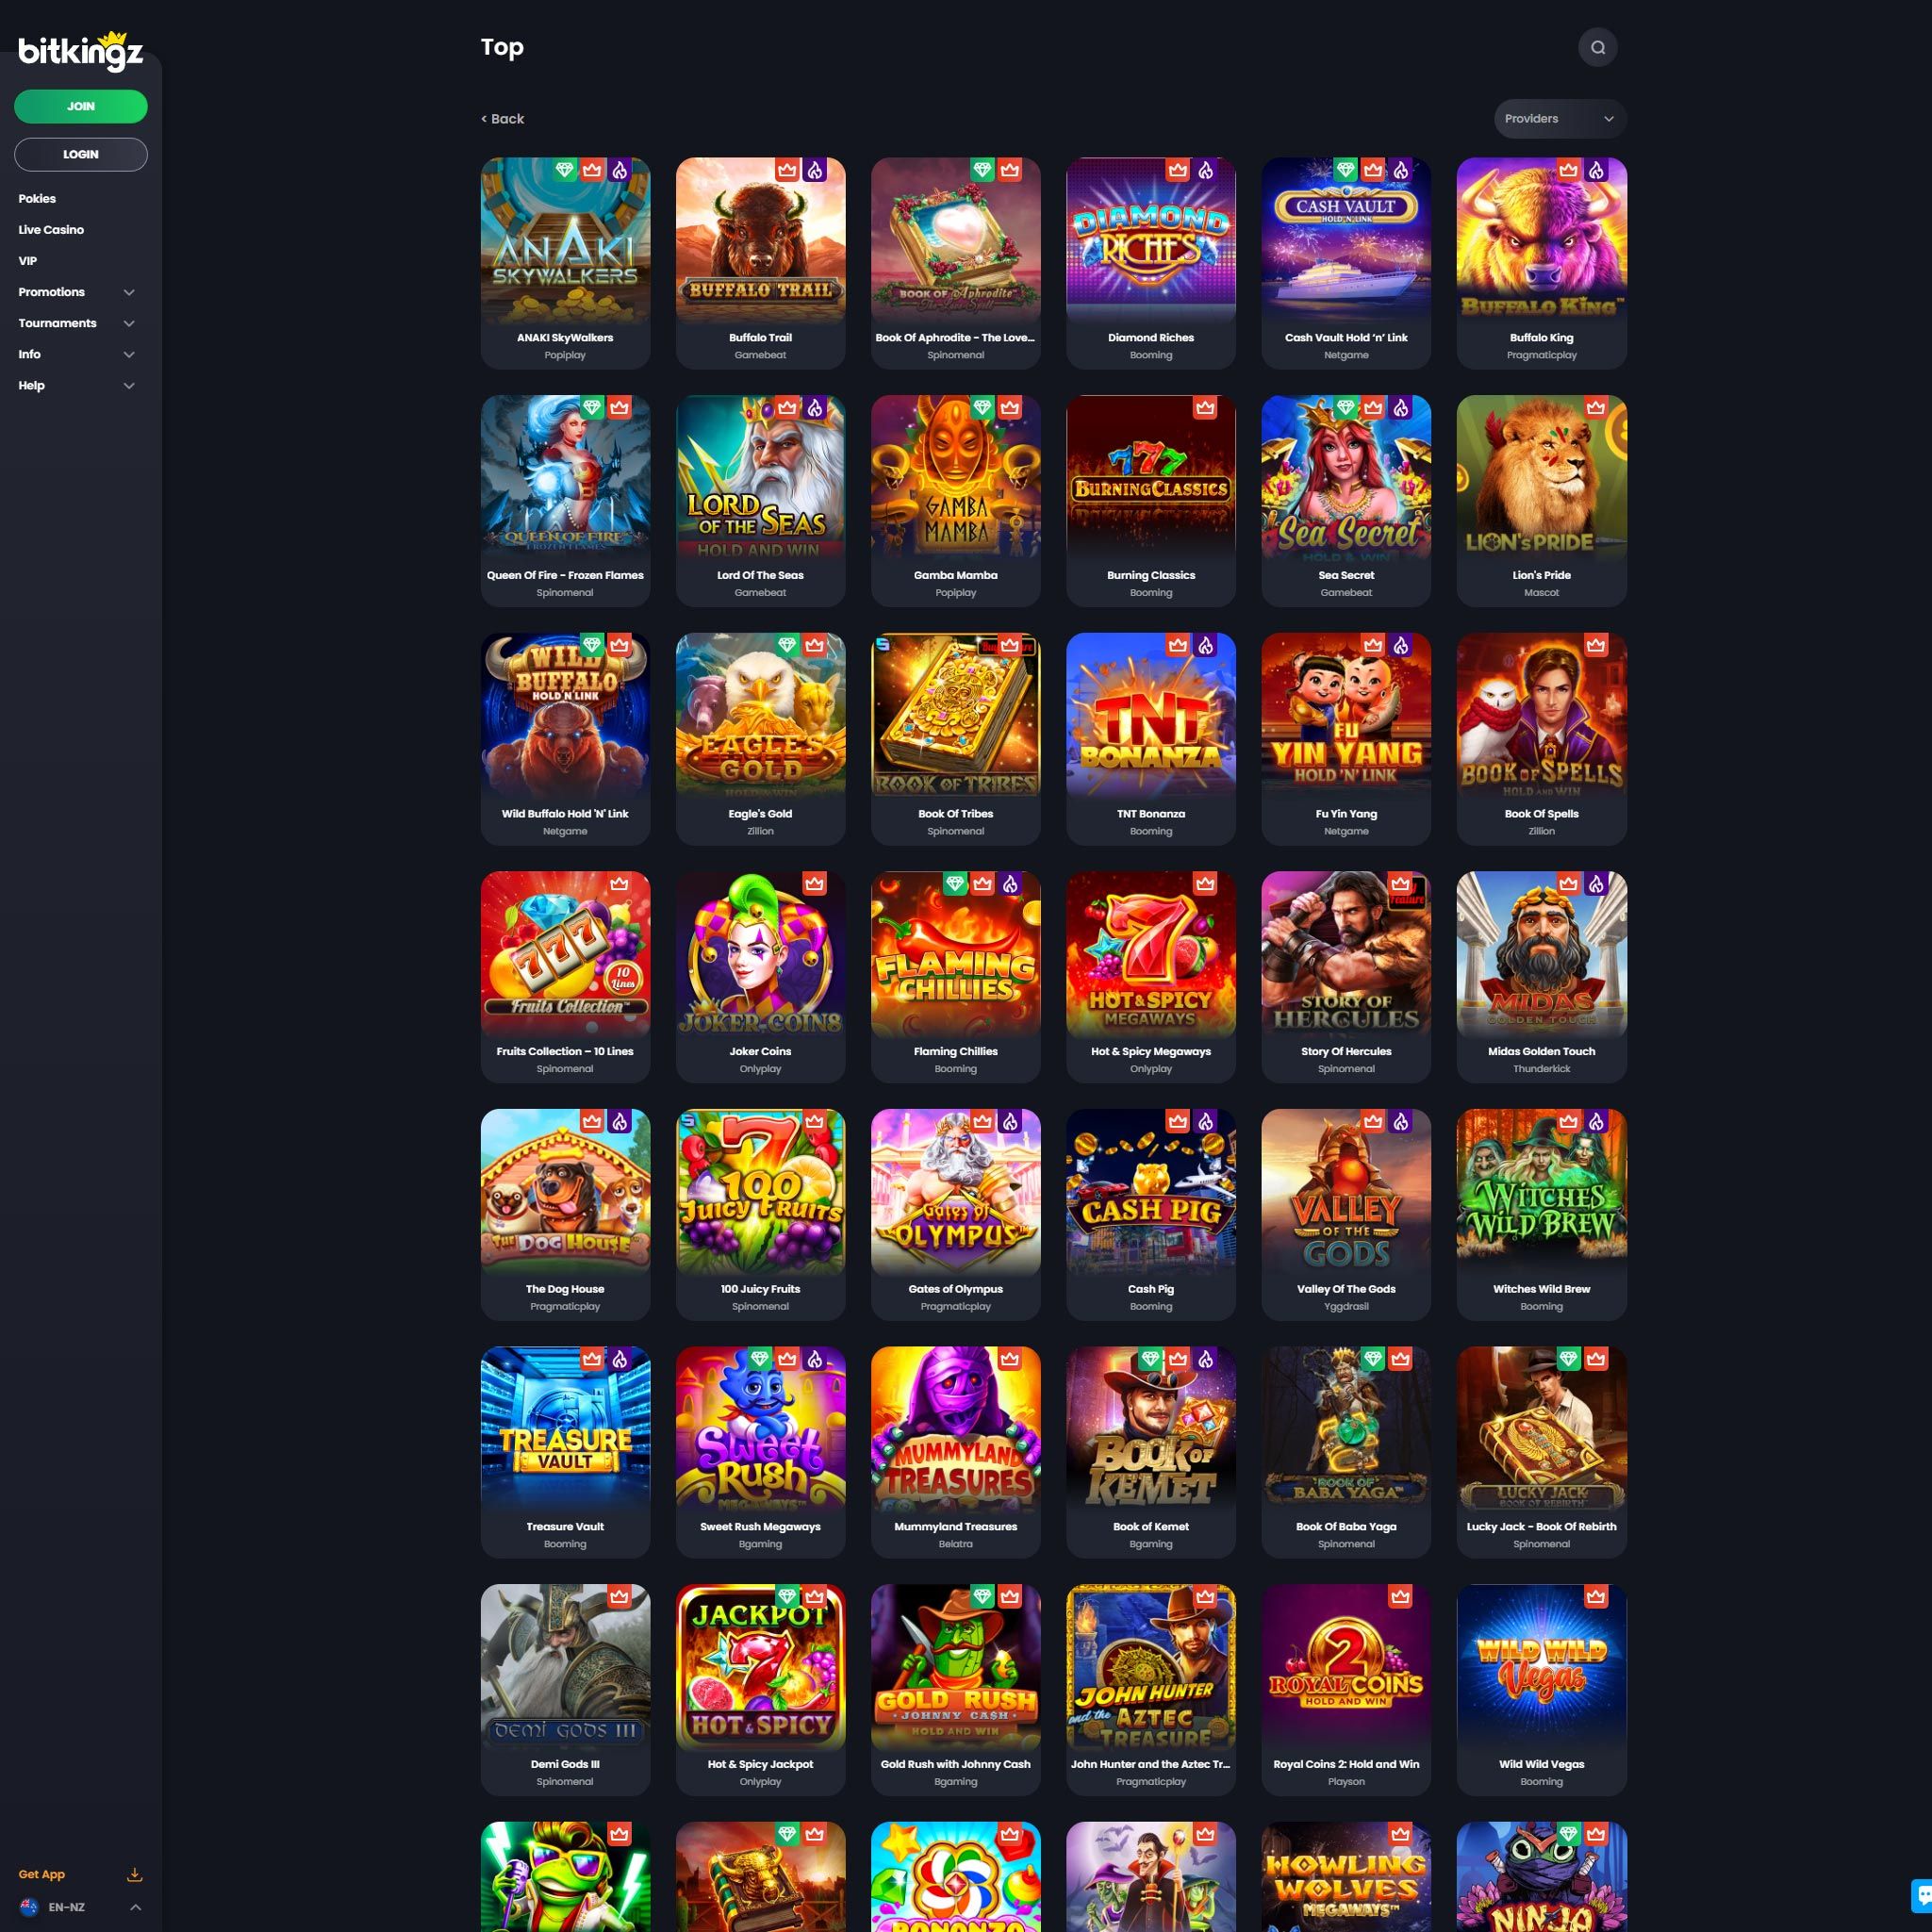 Bitkingz Casino full games catalogue